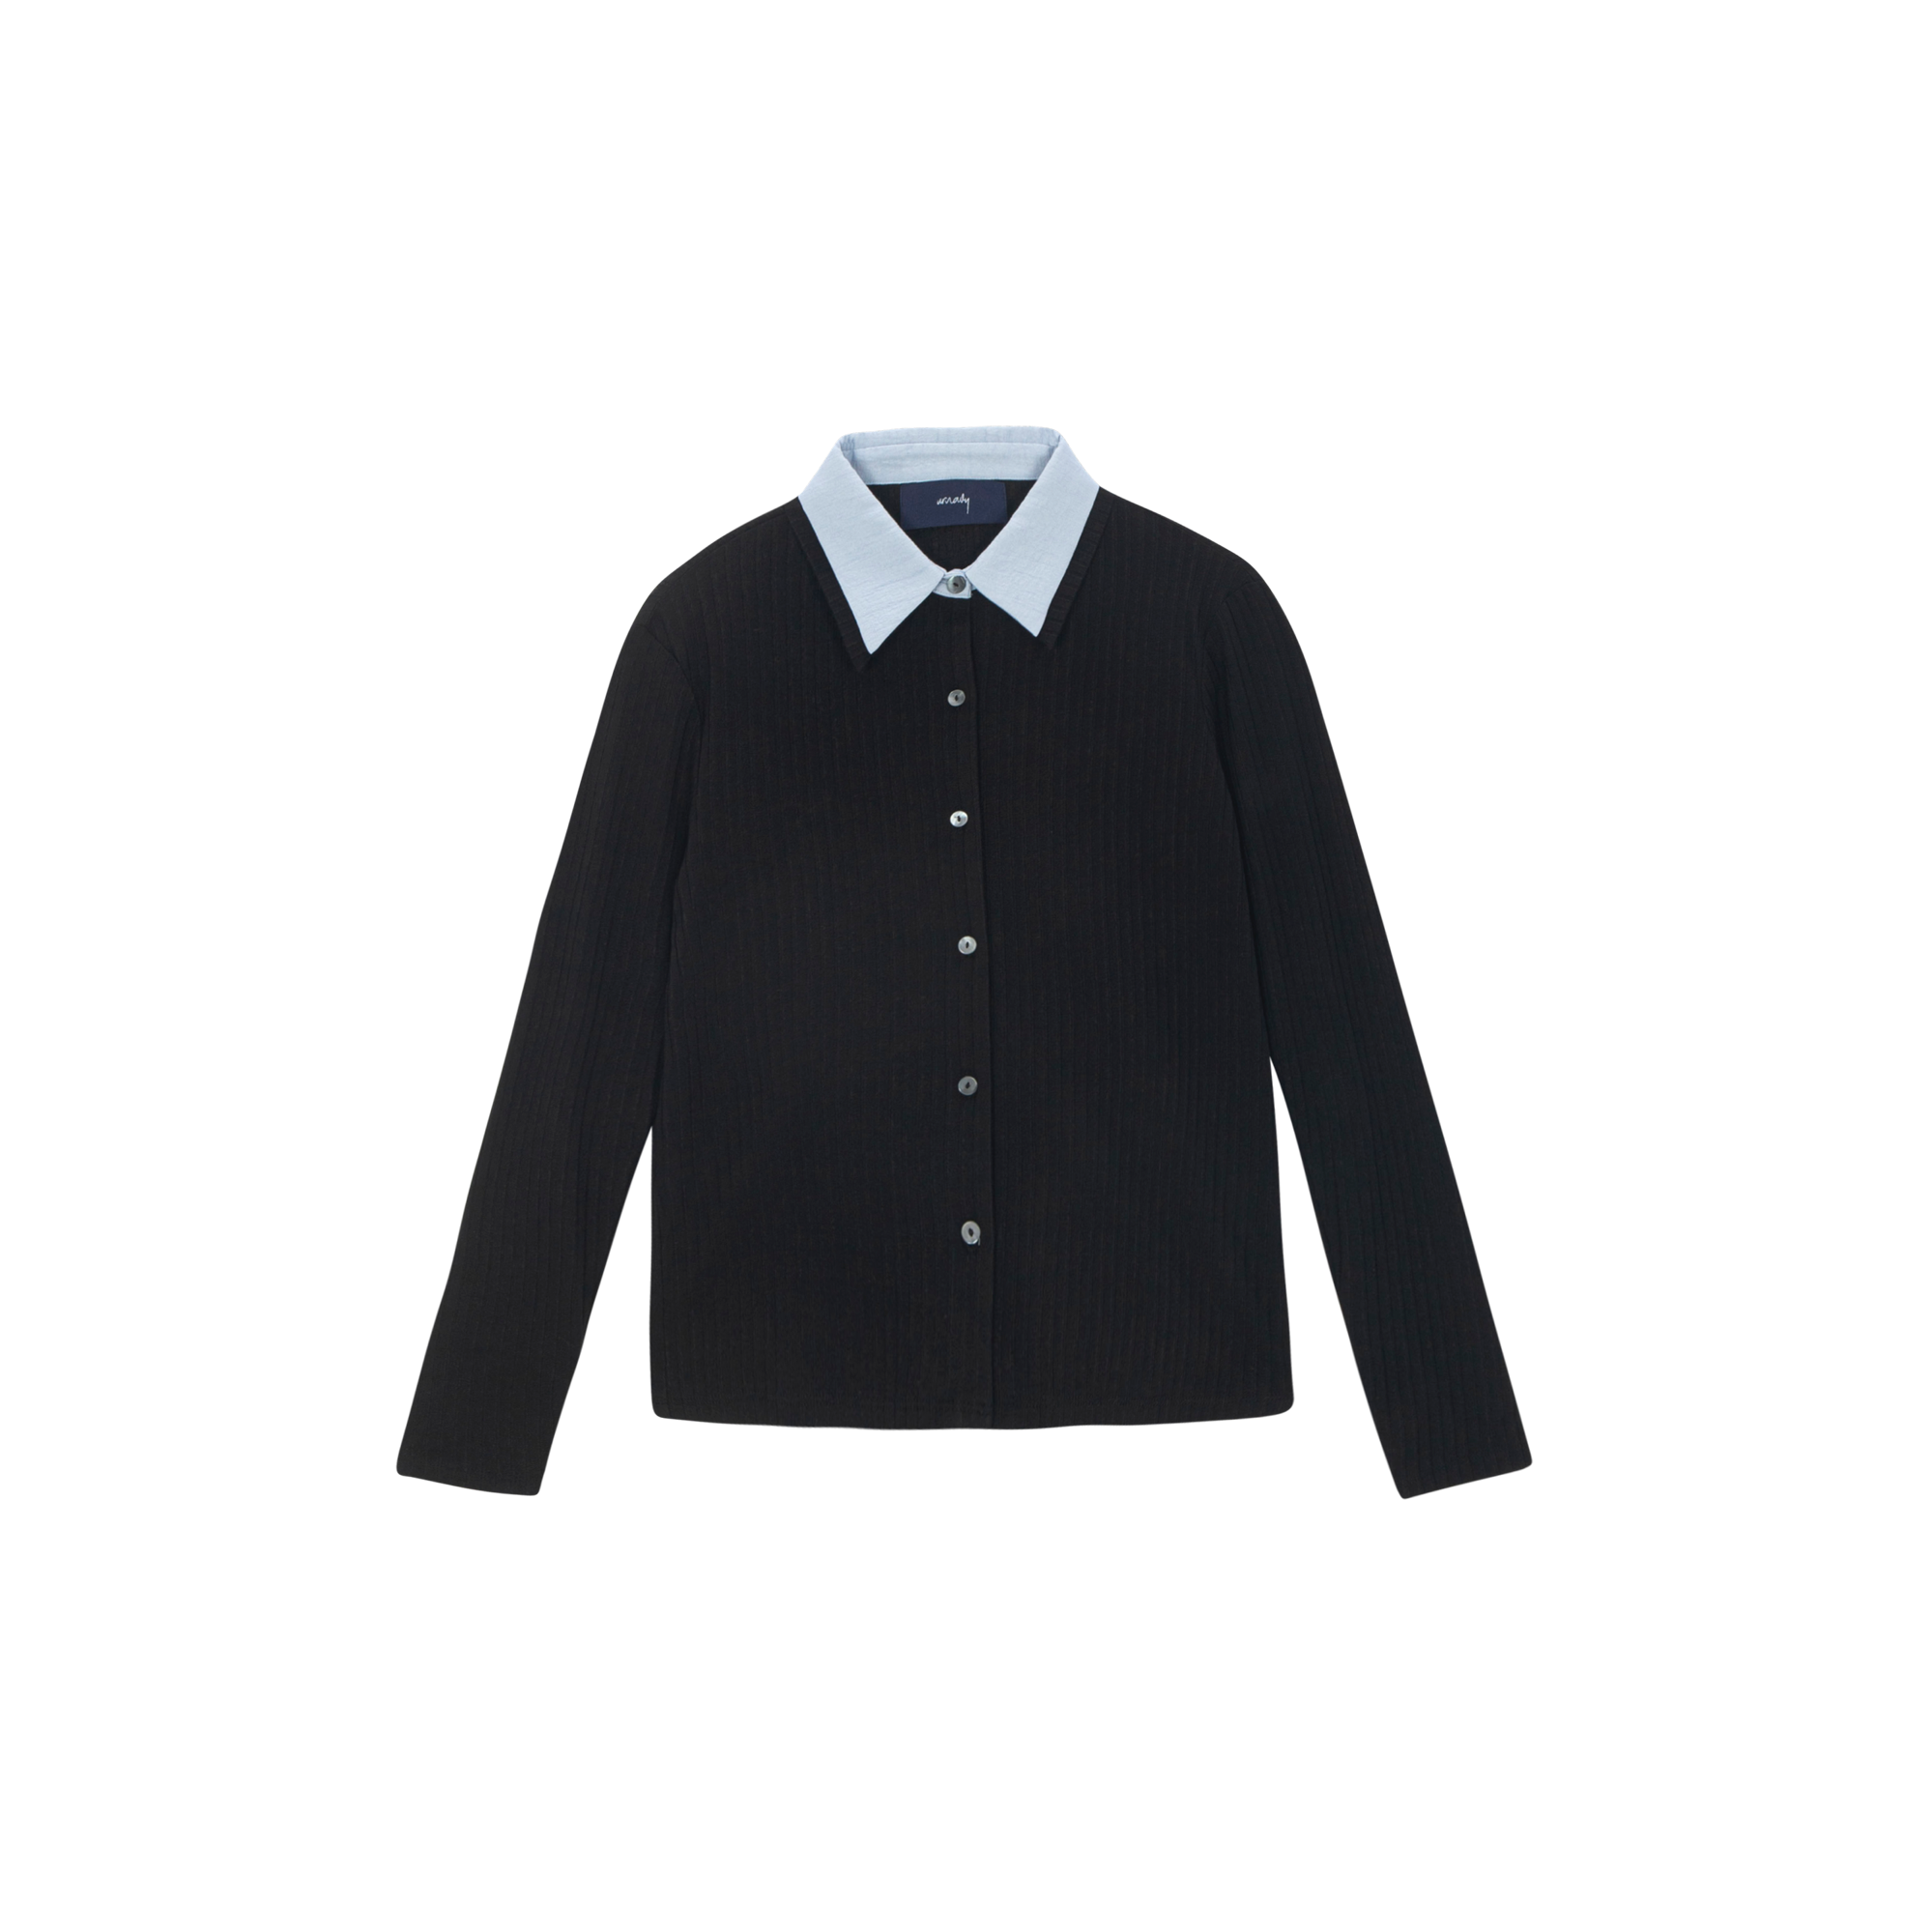 Double Collar Jersey Shirt - Black